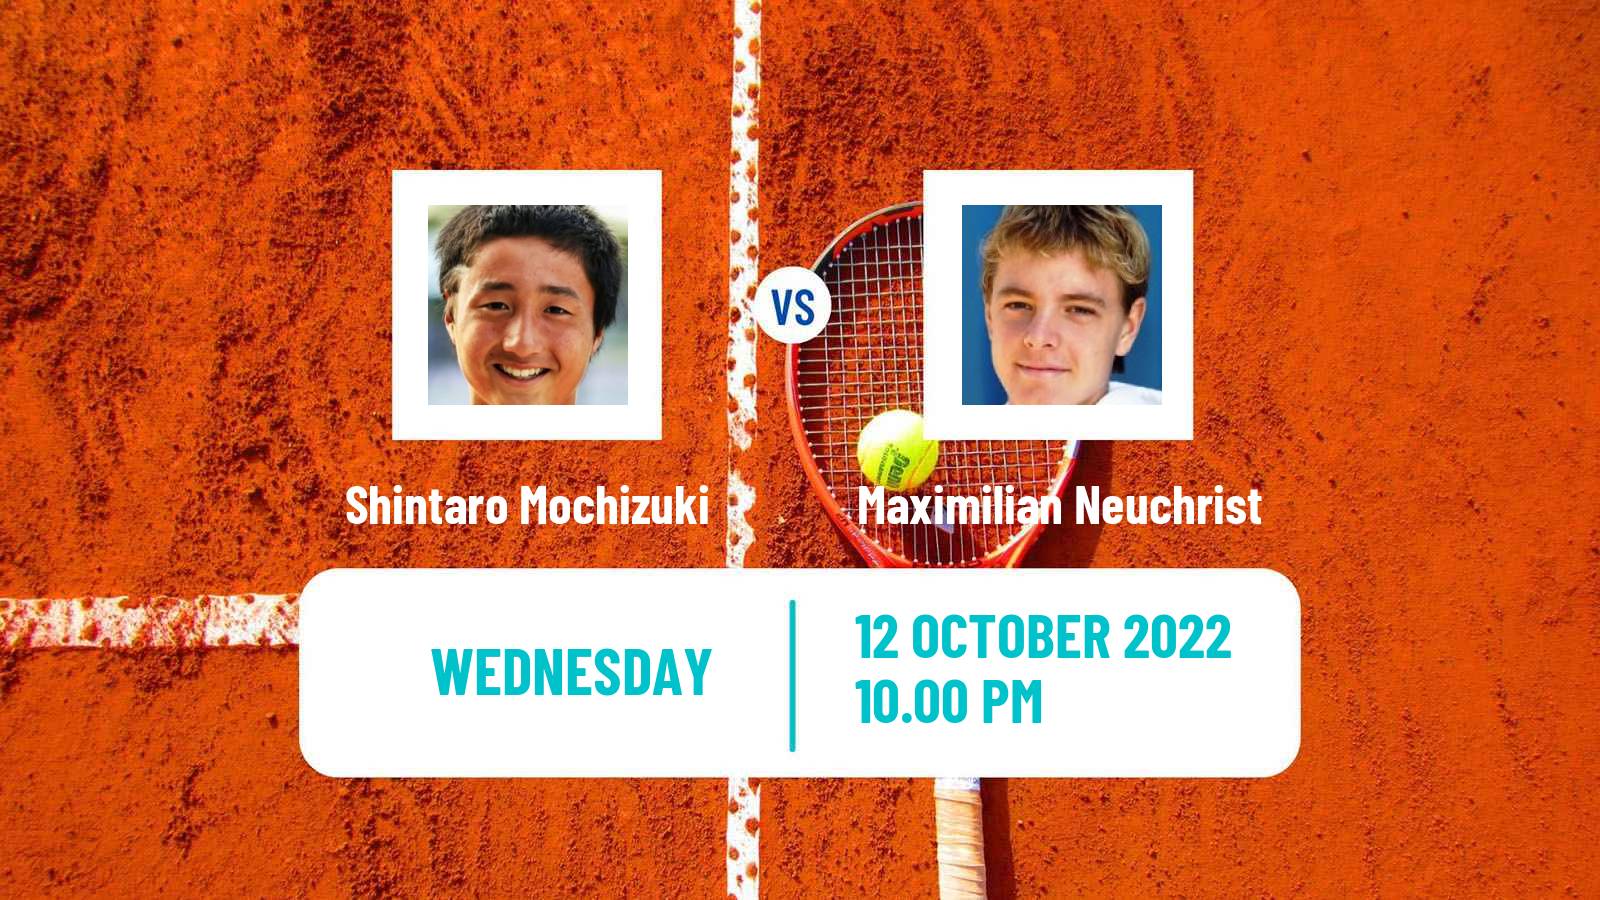 Tennis ATP Challenger Shintaro Mochizuki - Maximilian Neuchrist